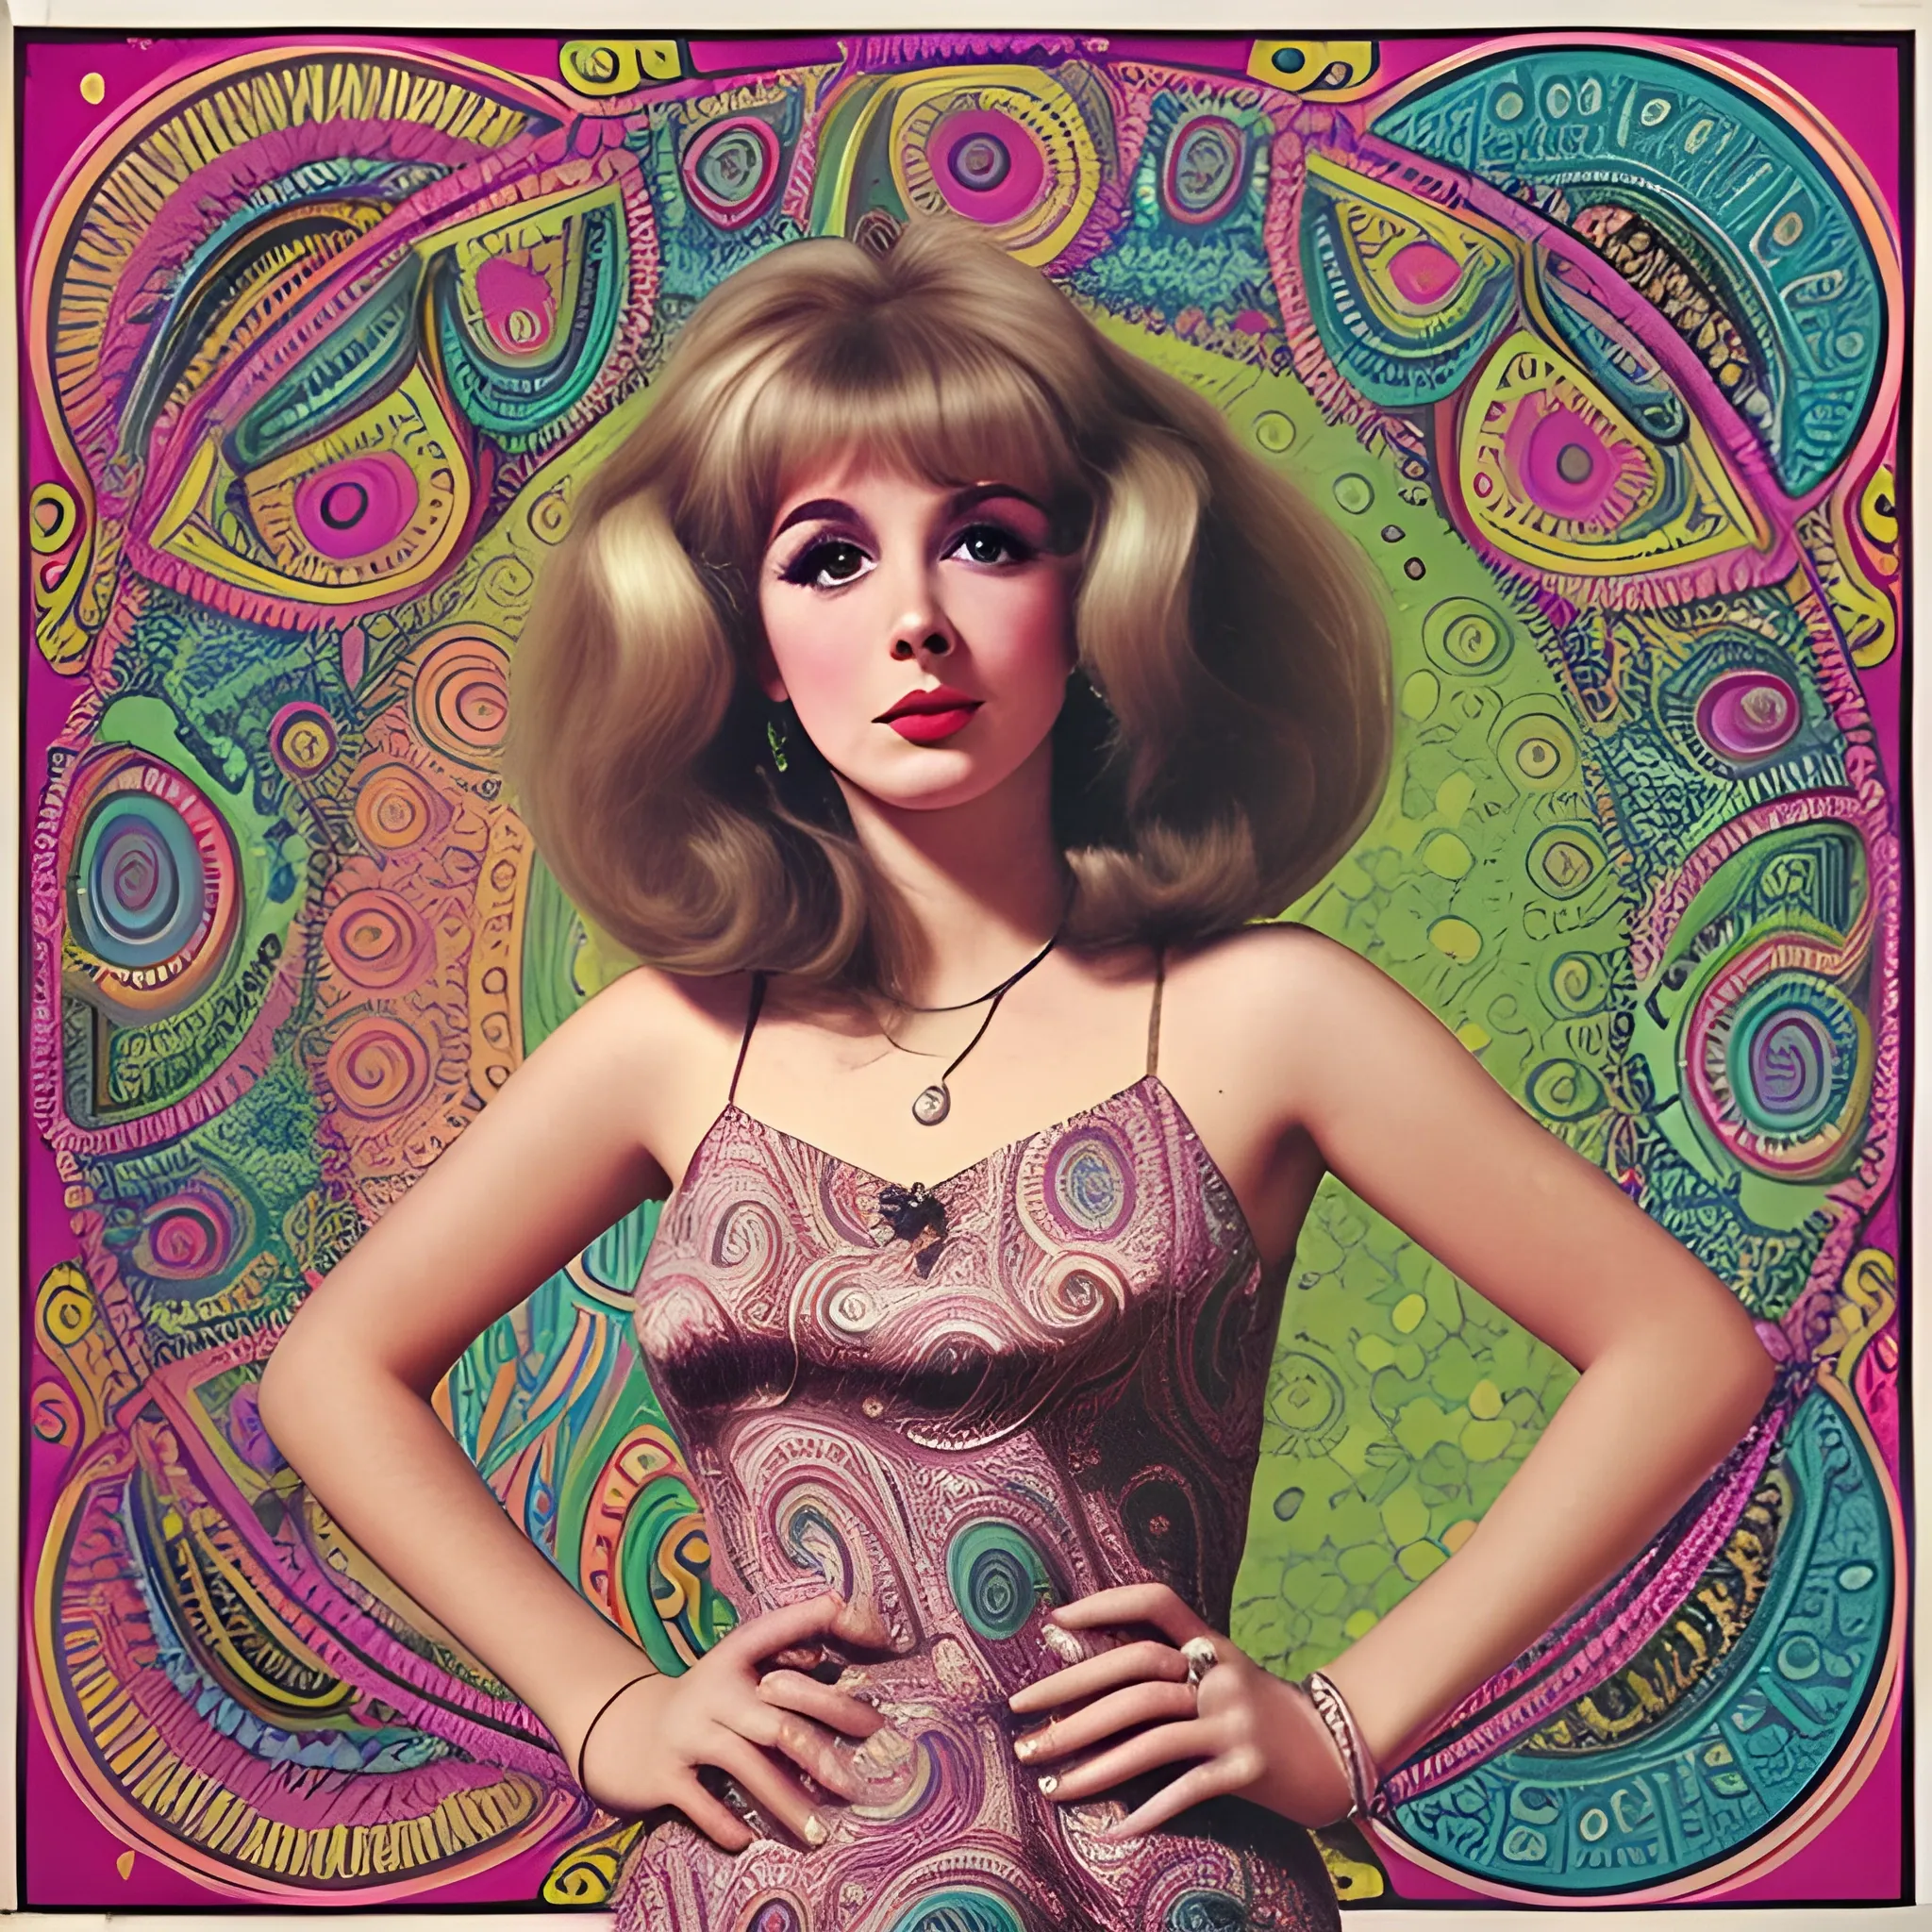 1960's, music album cover, hippy chick, paisley